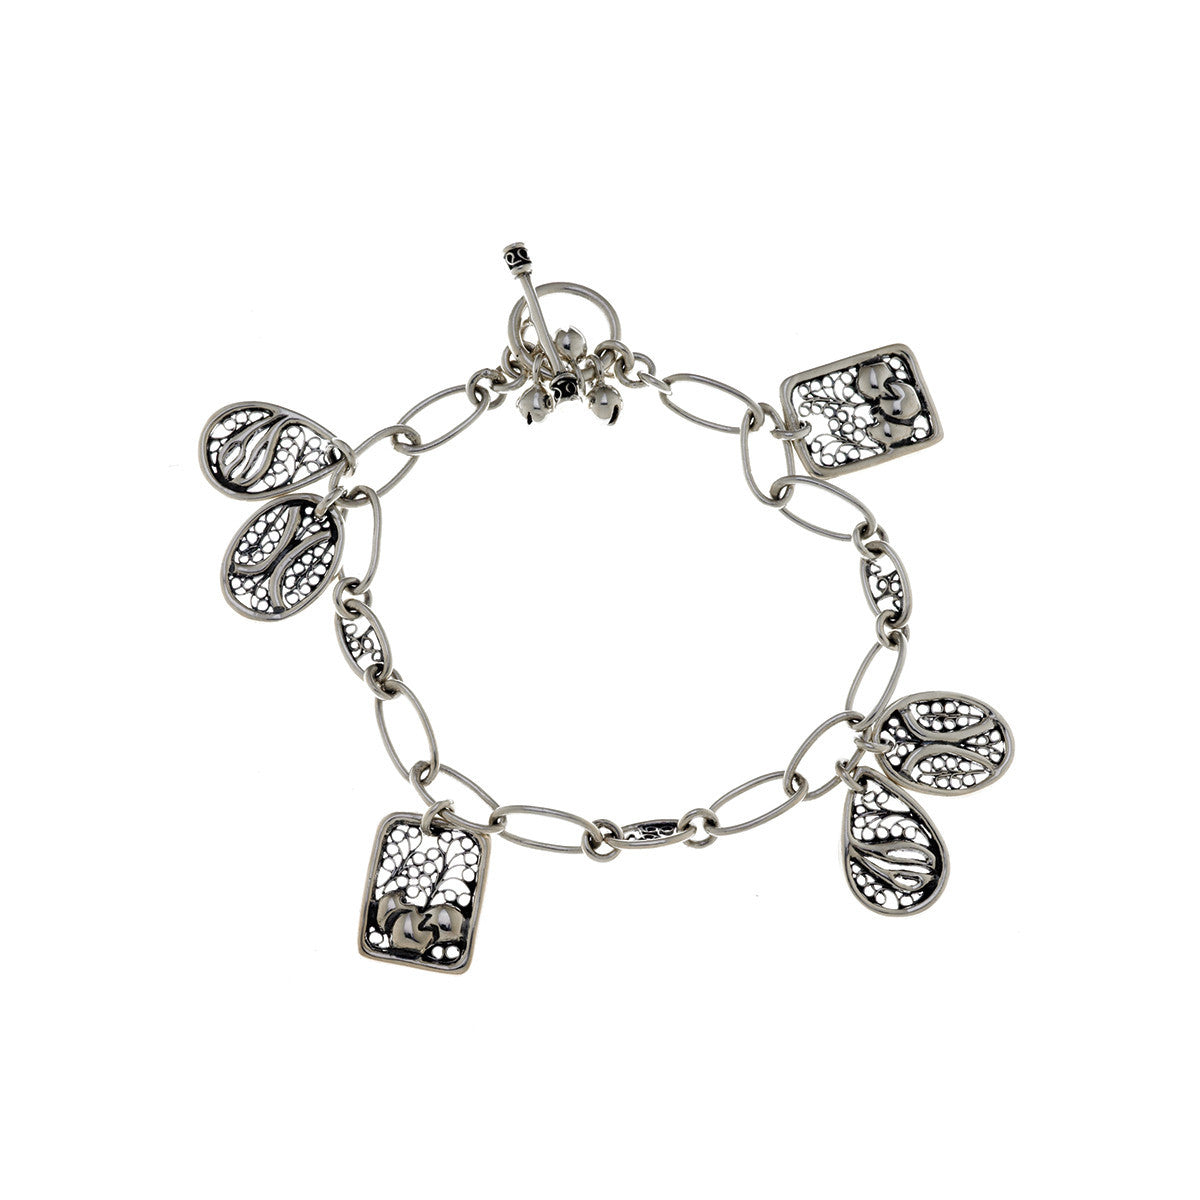 Belle Nouveau Sterling Silver Charm Bracelet - Cynthia Gale New York Jewelry